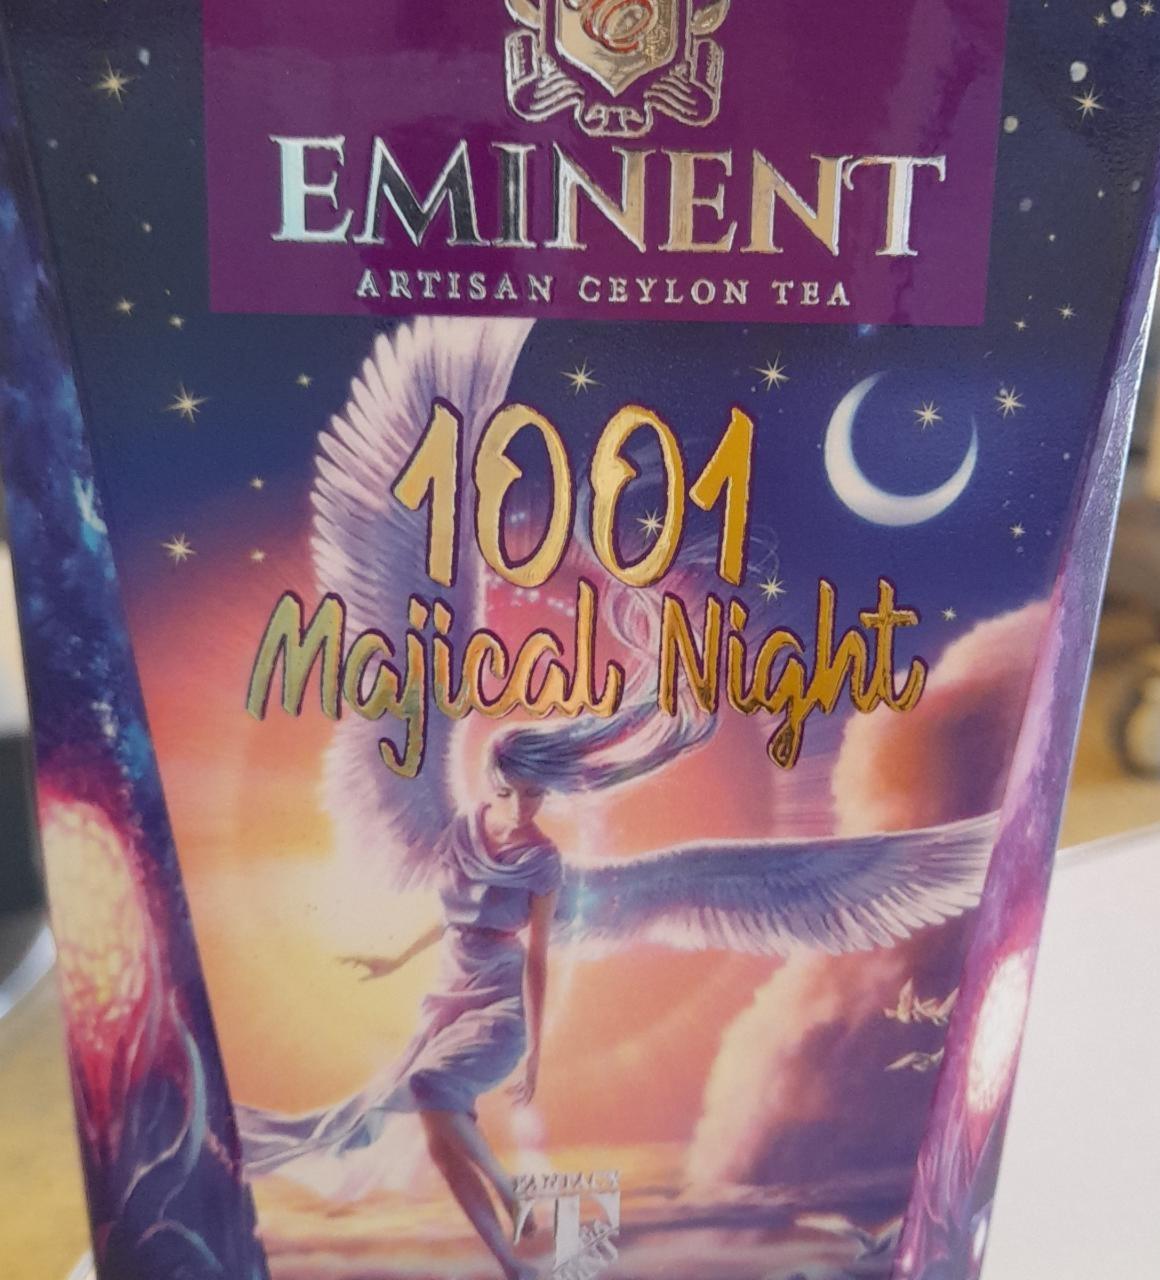 Fotografie - 1001 Magical Night Eminent Artisan Ceylon tea